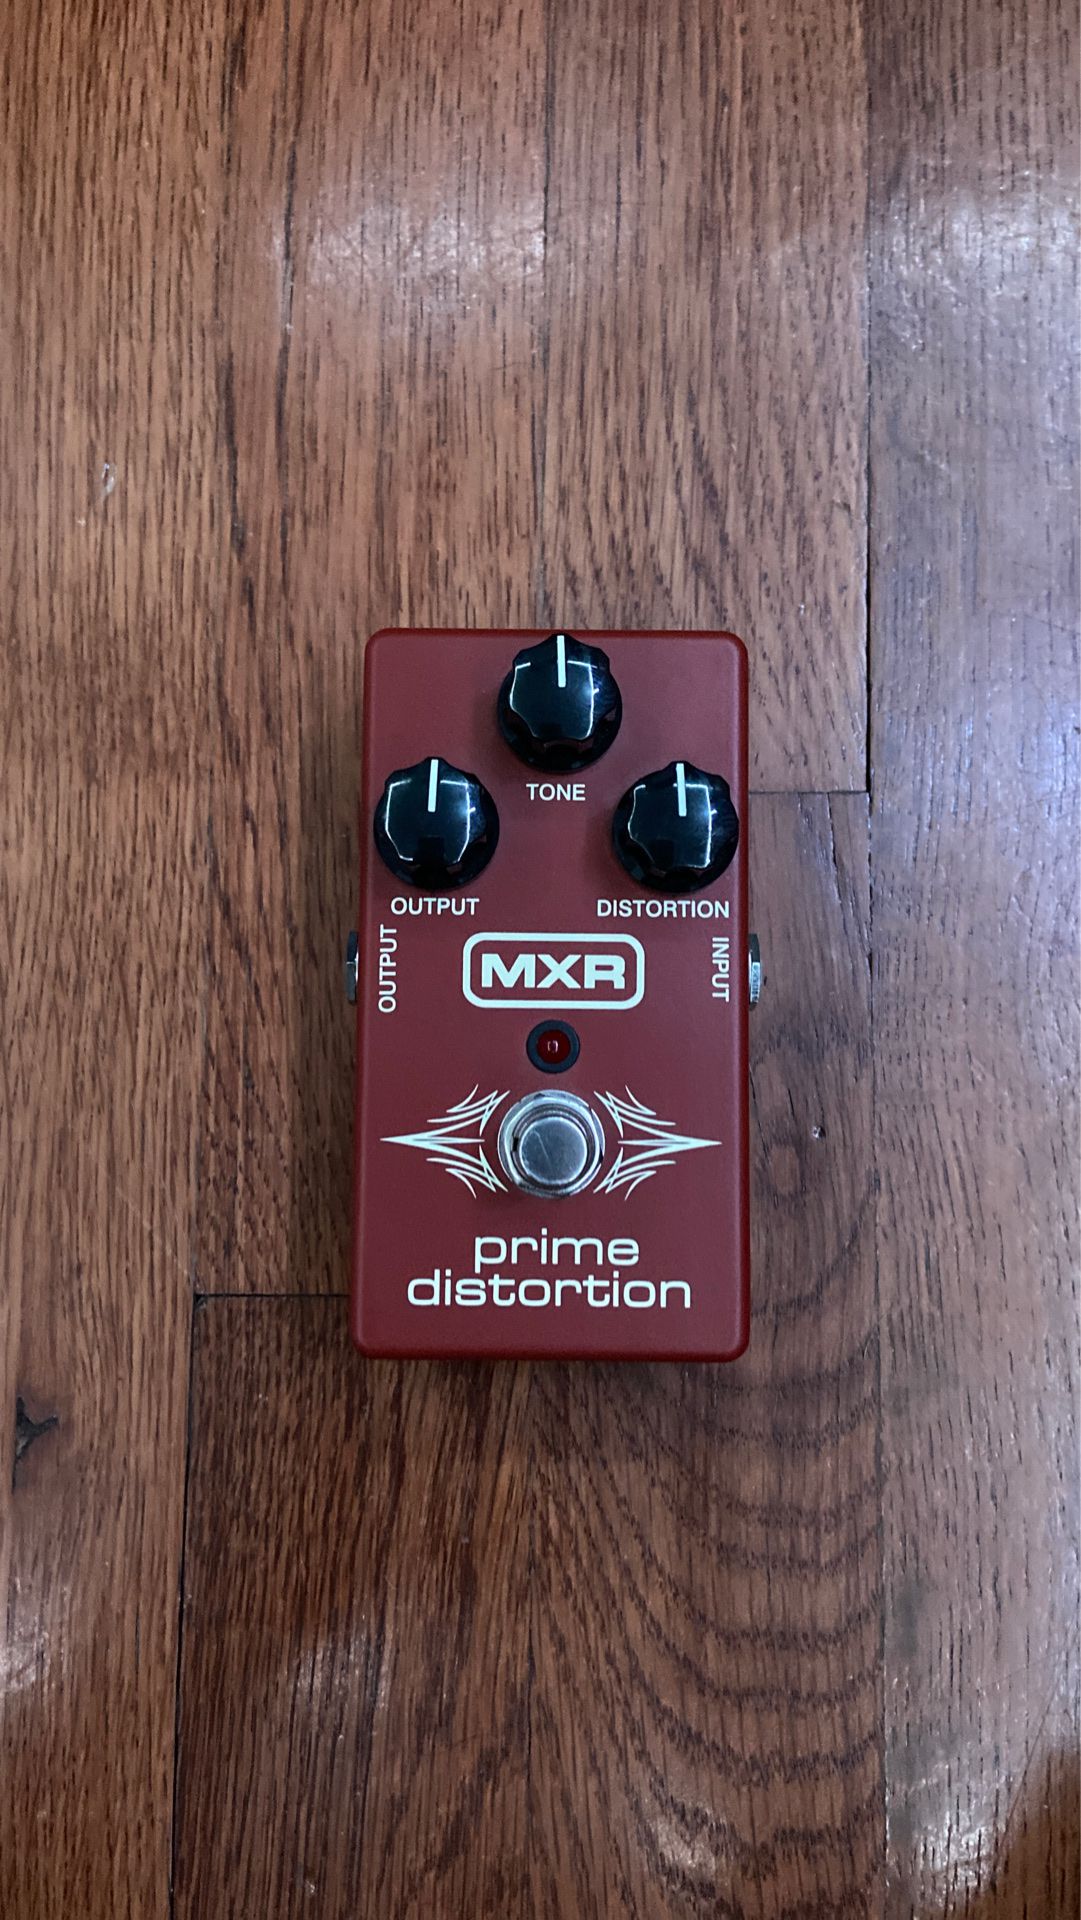 MXR Prime Distortion guitar pedal